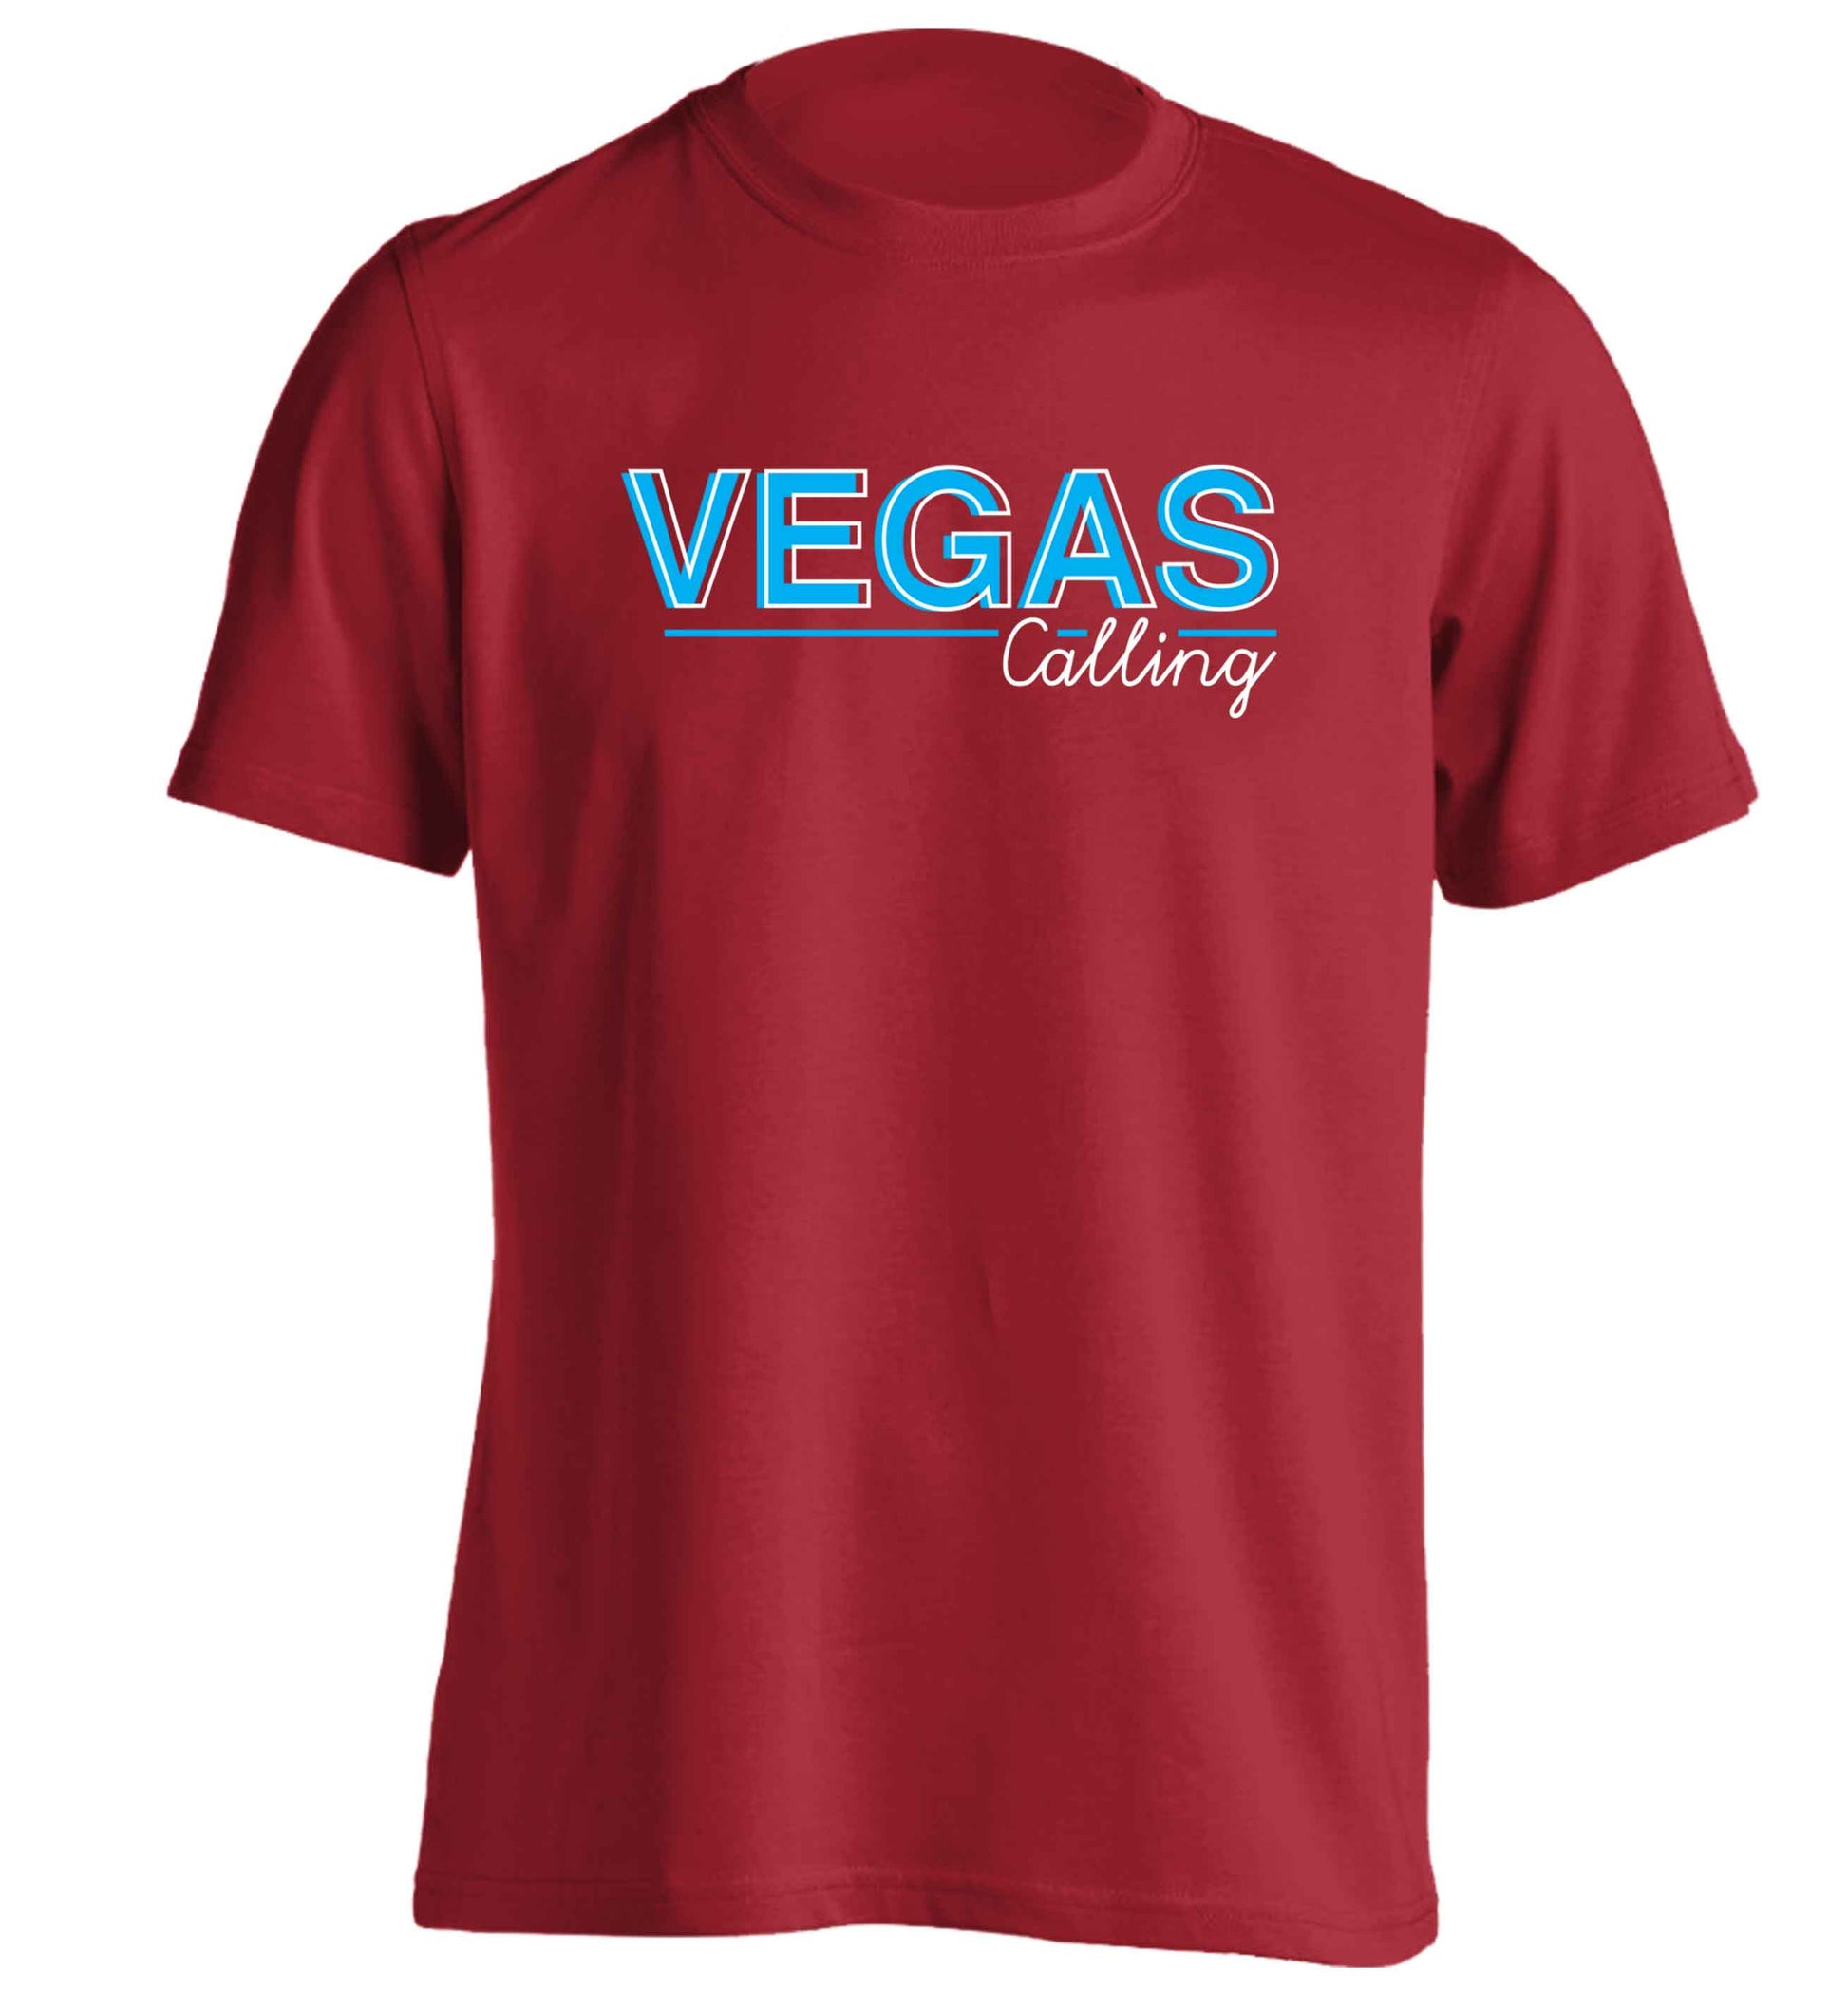 Vegas calling adults unisex red Tshirt 2XL